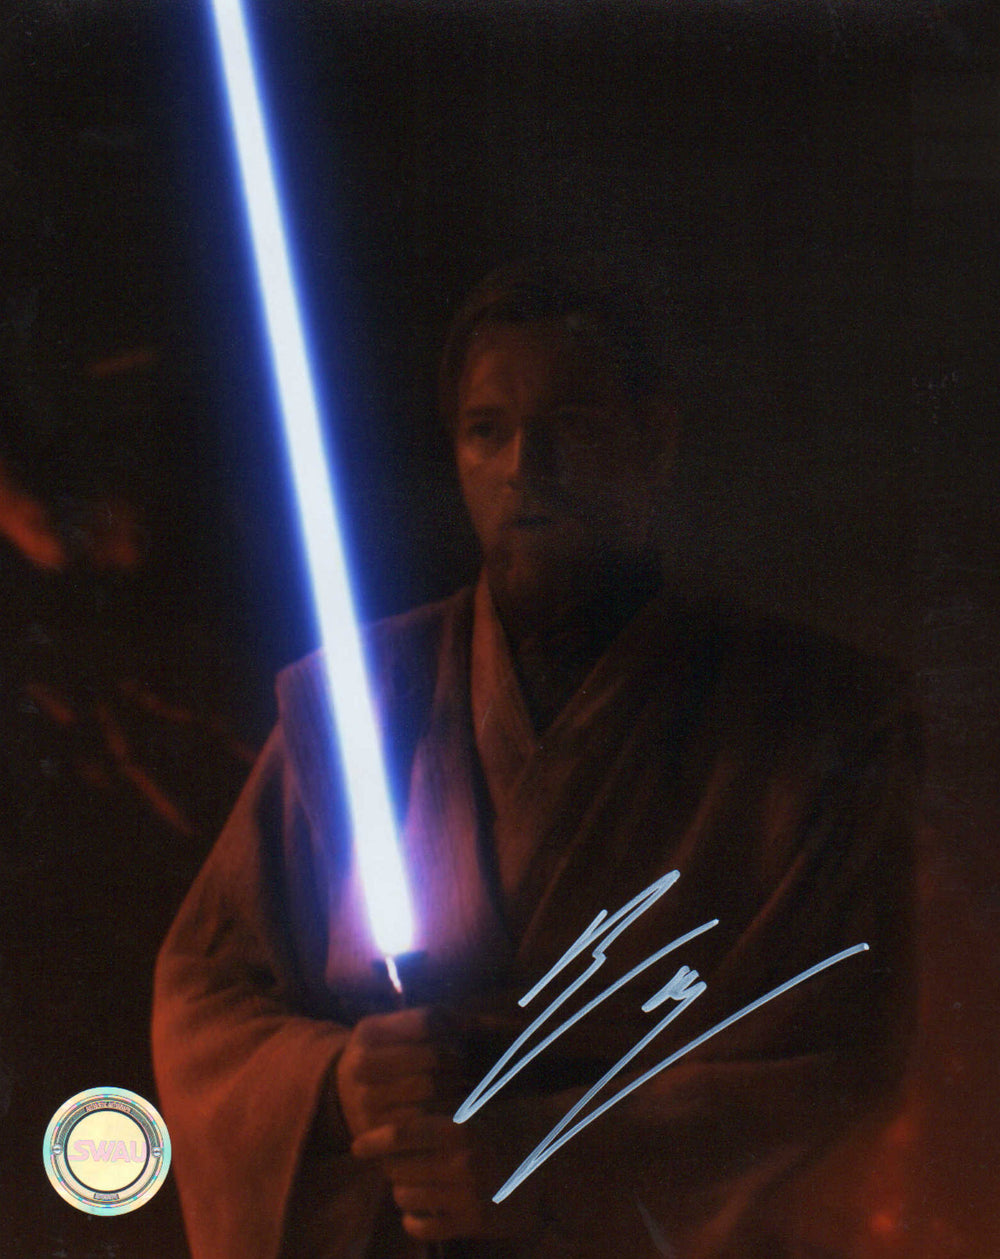 Ewan McGregor as Obi-Wan Kenobi in Star Wars Episode III: Revenge of the Sith (SWAU Witnessed) Signed 8x10 Photo